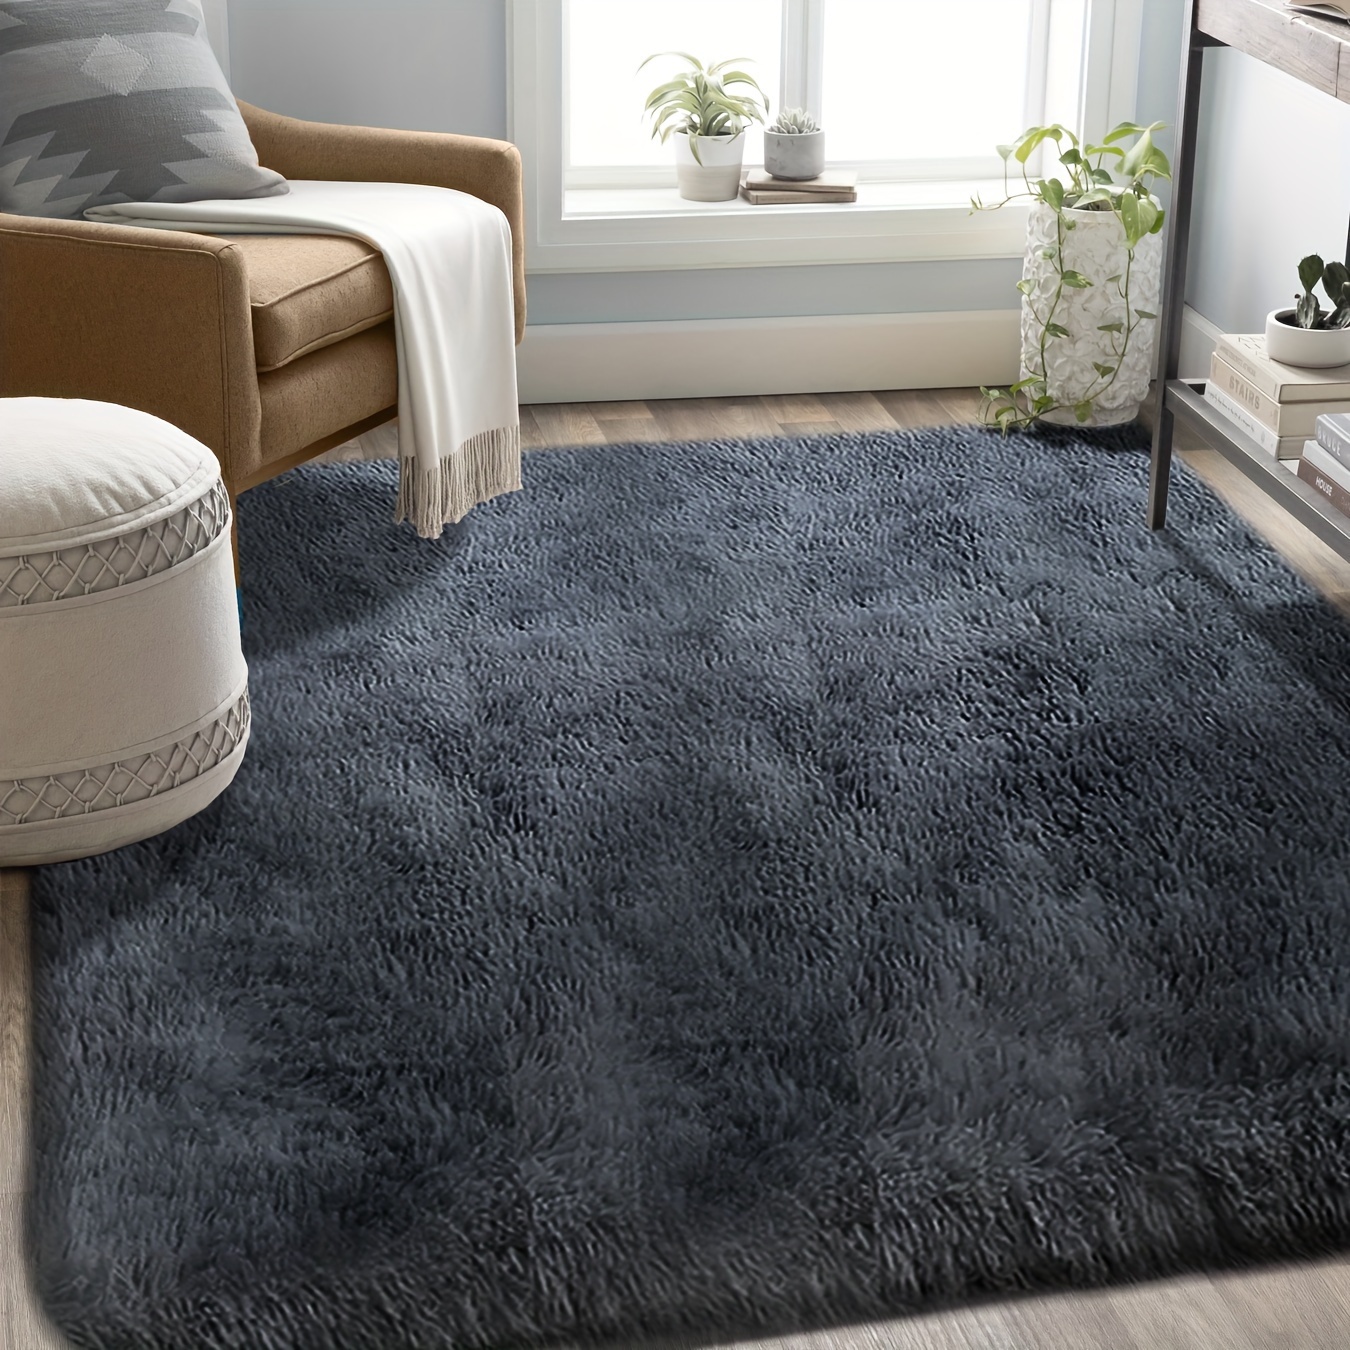 1pc soft fluffy shag area rugs for living room shaggy floor carpet for bedroom carpets home decor rugs cute luxury non slip machine washable home decor room decor